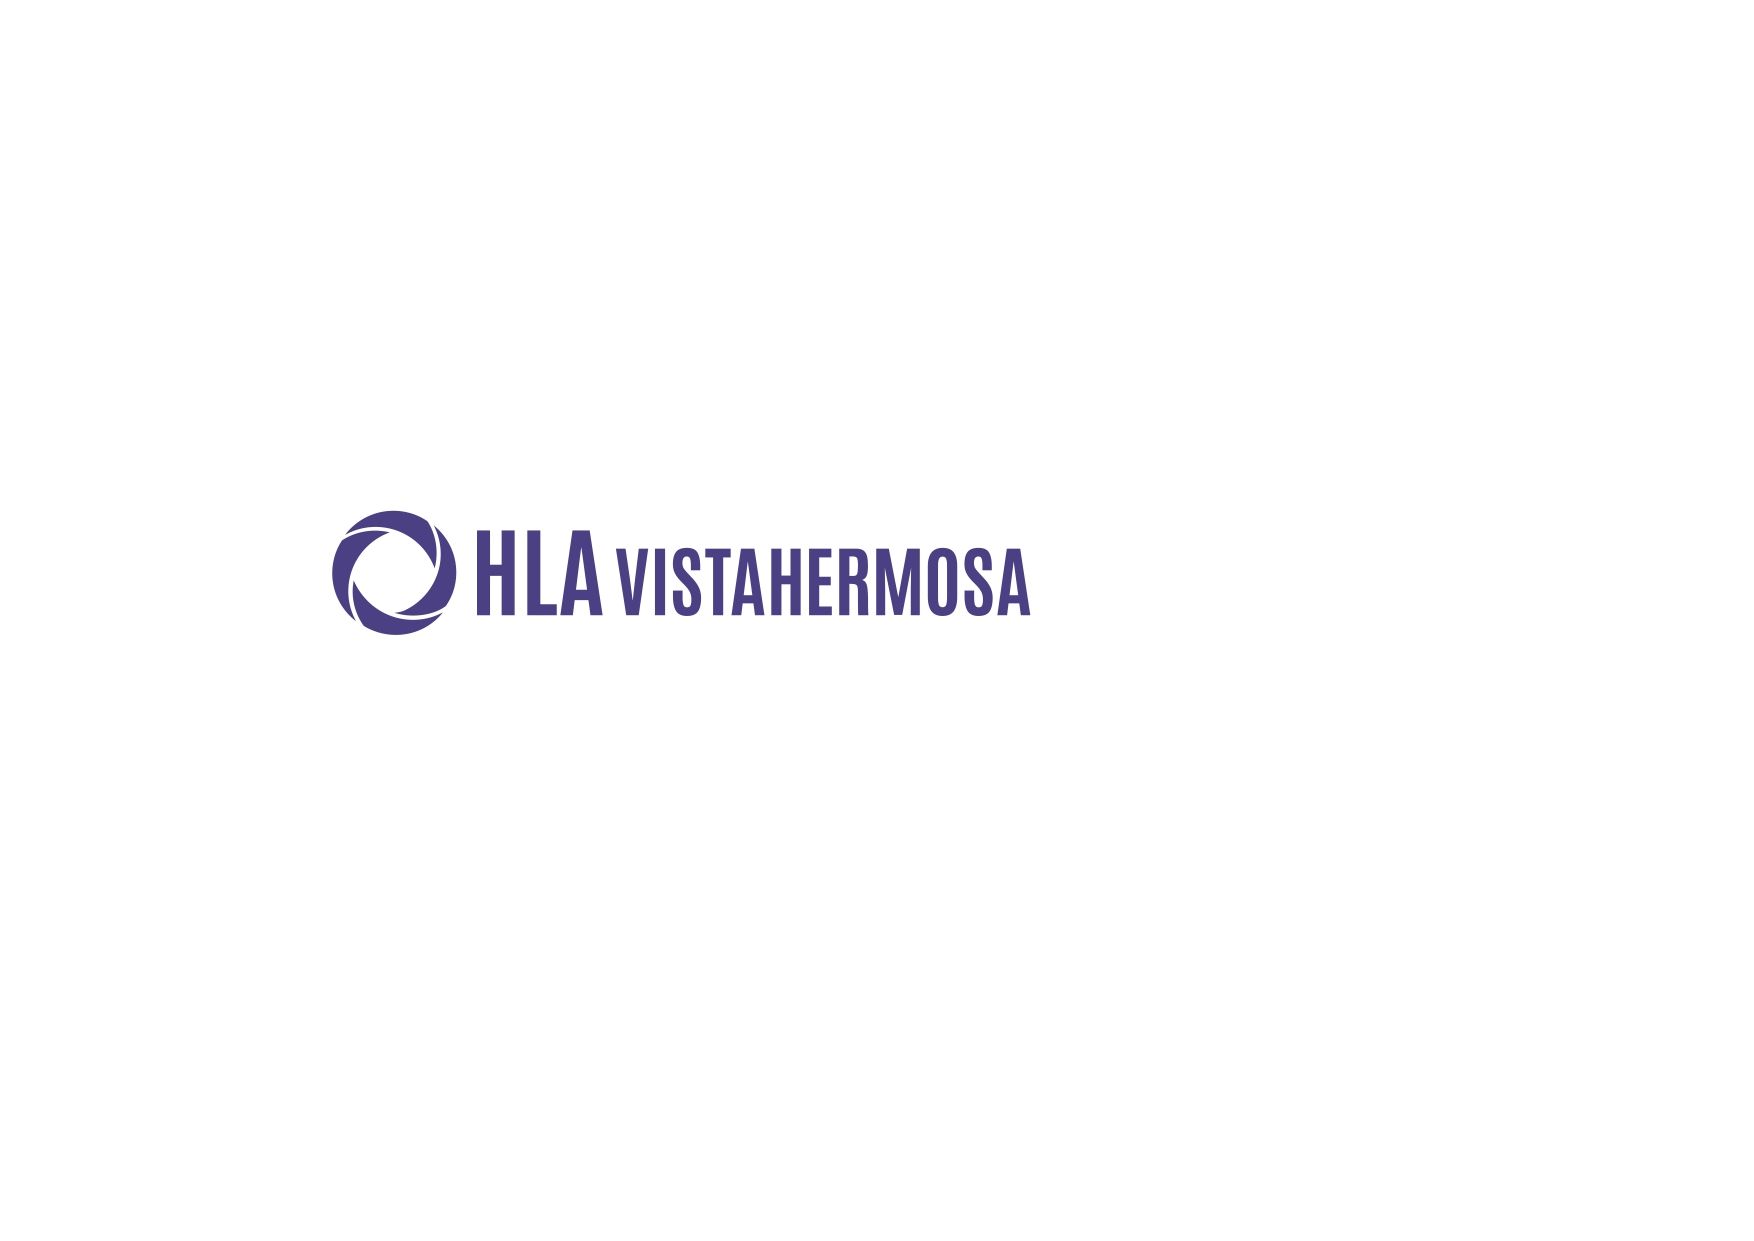 Logo HLA VISTAHERMOSA PANTONE 7672_PRINCIPAL_page-0001.jpg